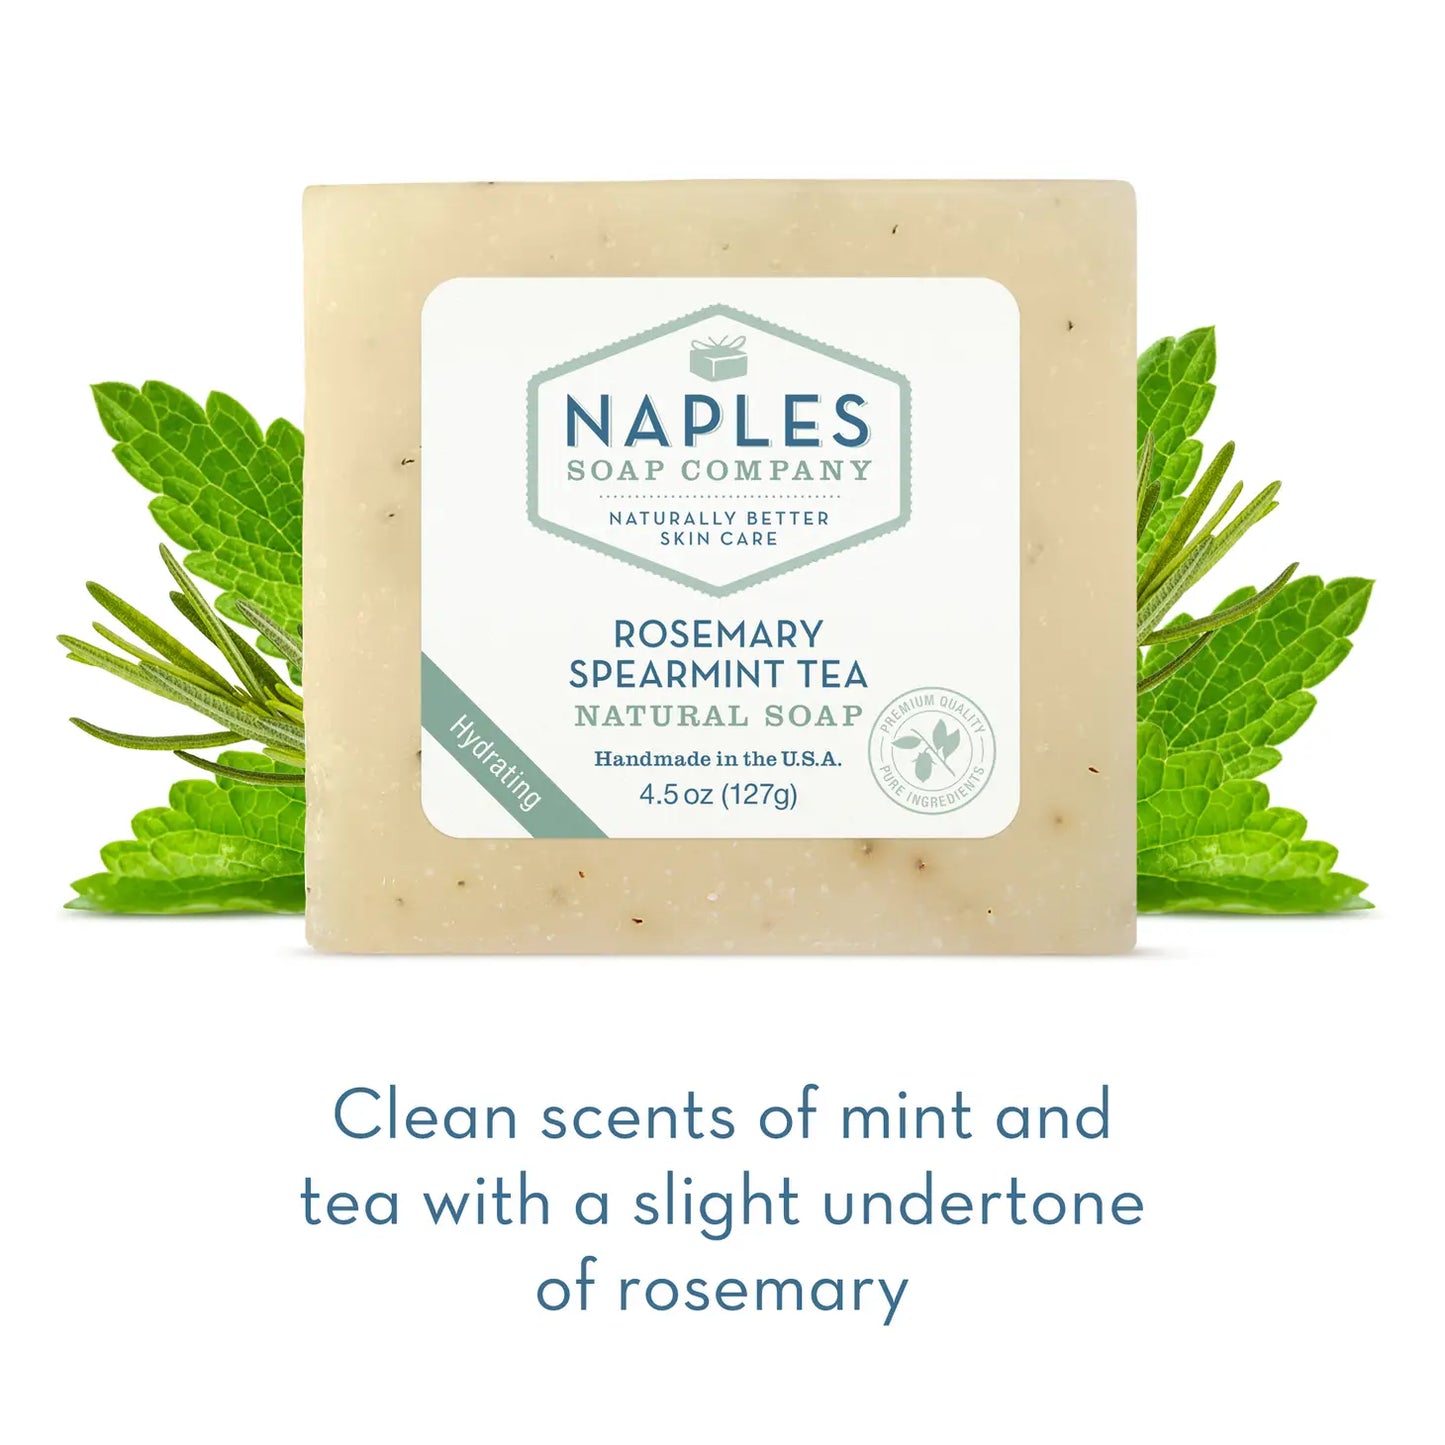 Naples Soap Co.: Rosemary Spearmint Tea Natural Soap